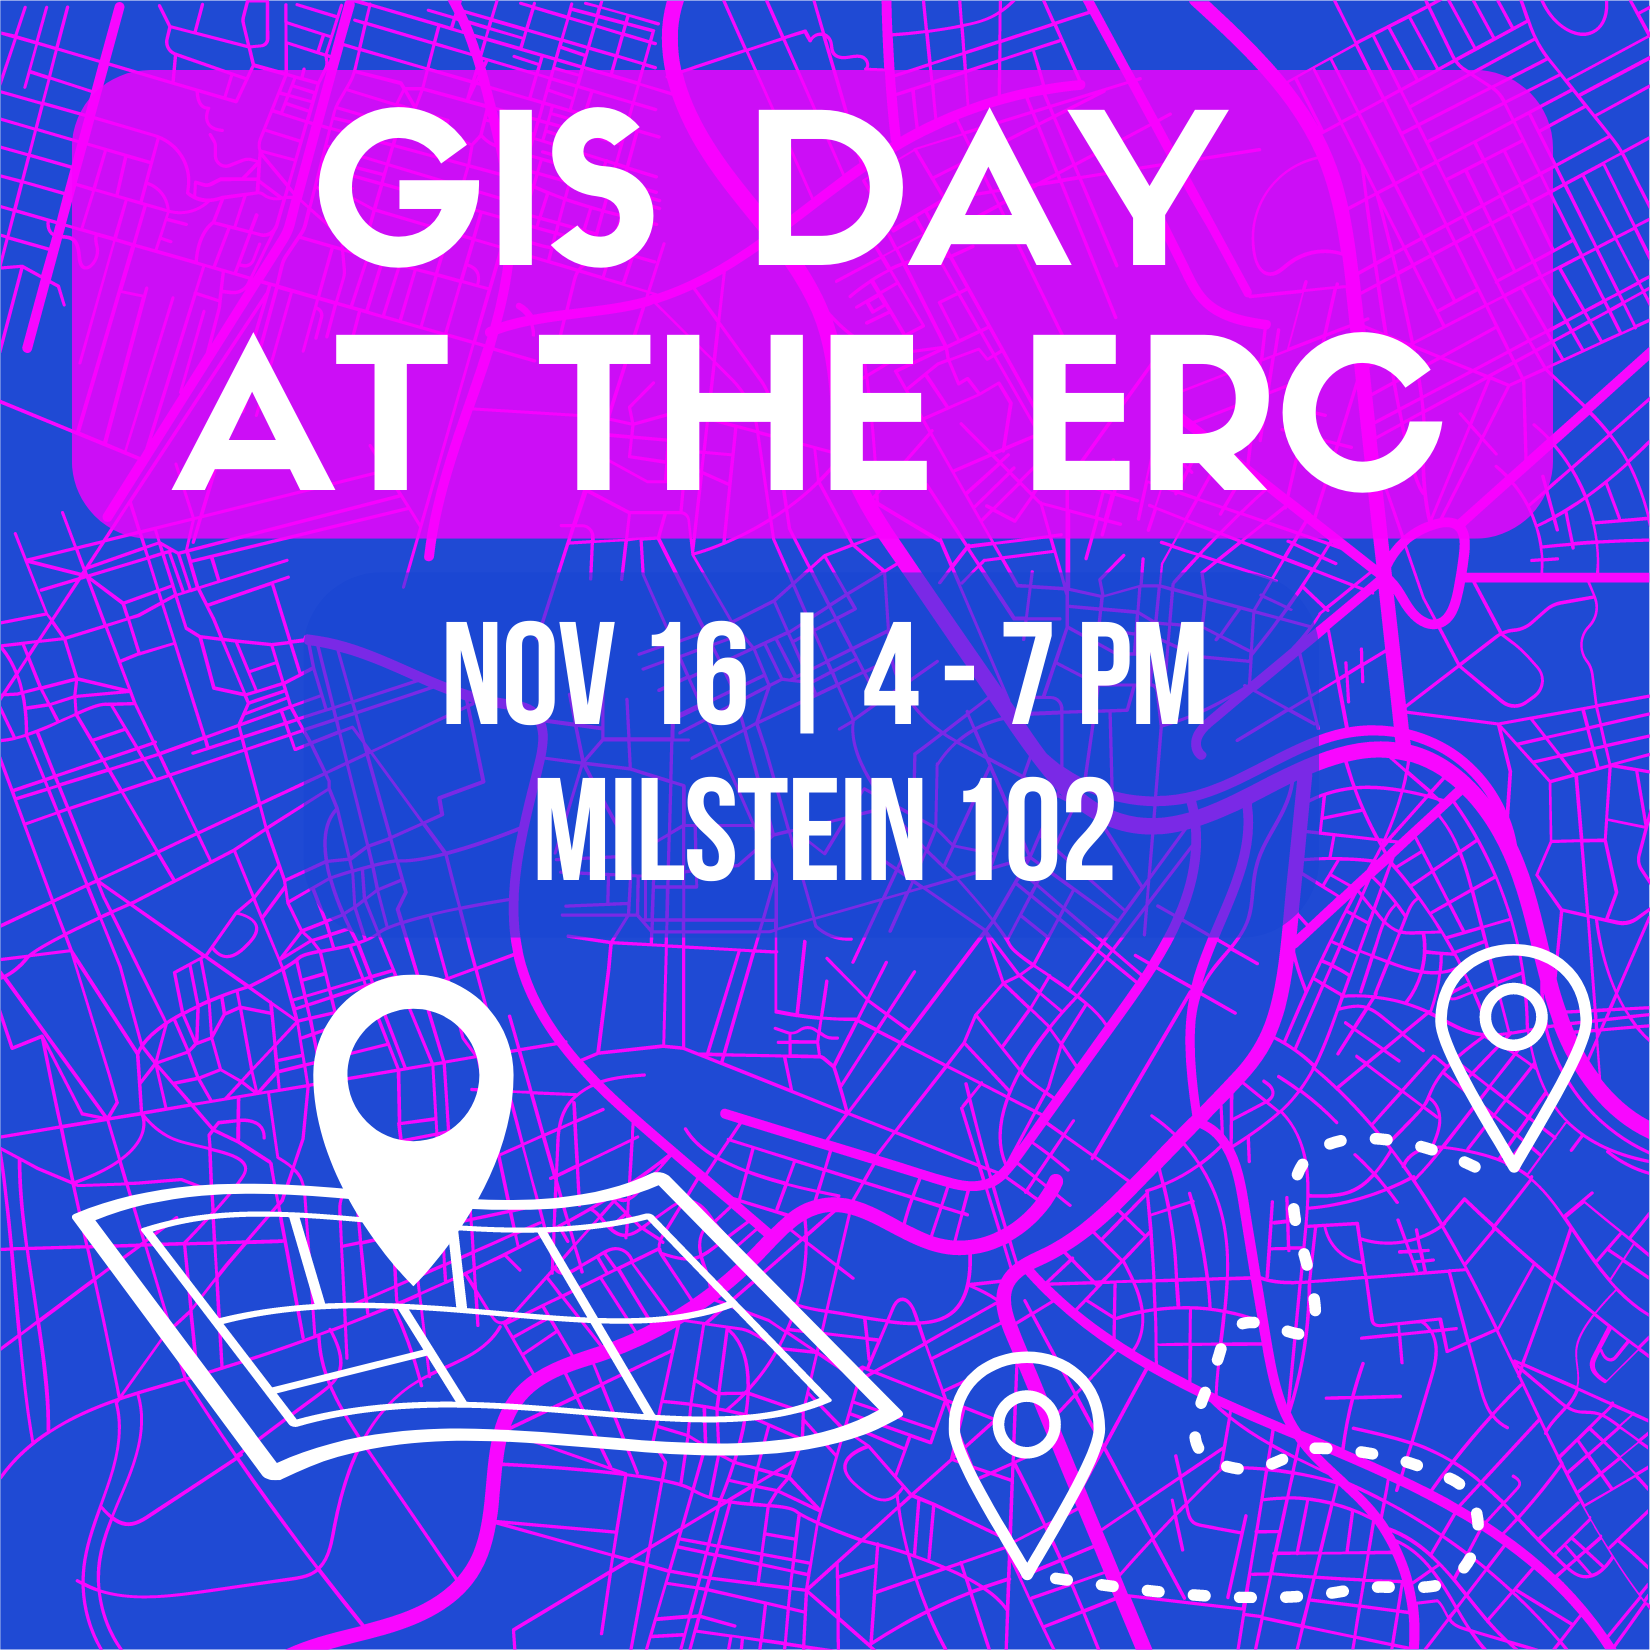 Flier that says GIS Day at the ERC, Nov 16 4-7pm, Milstein 102